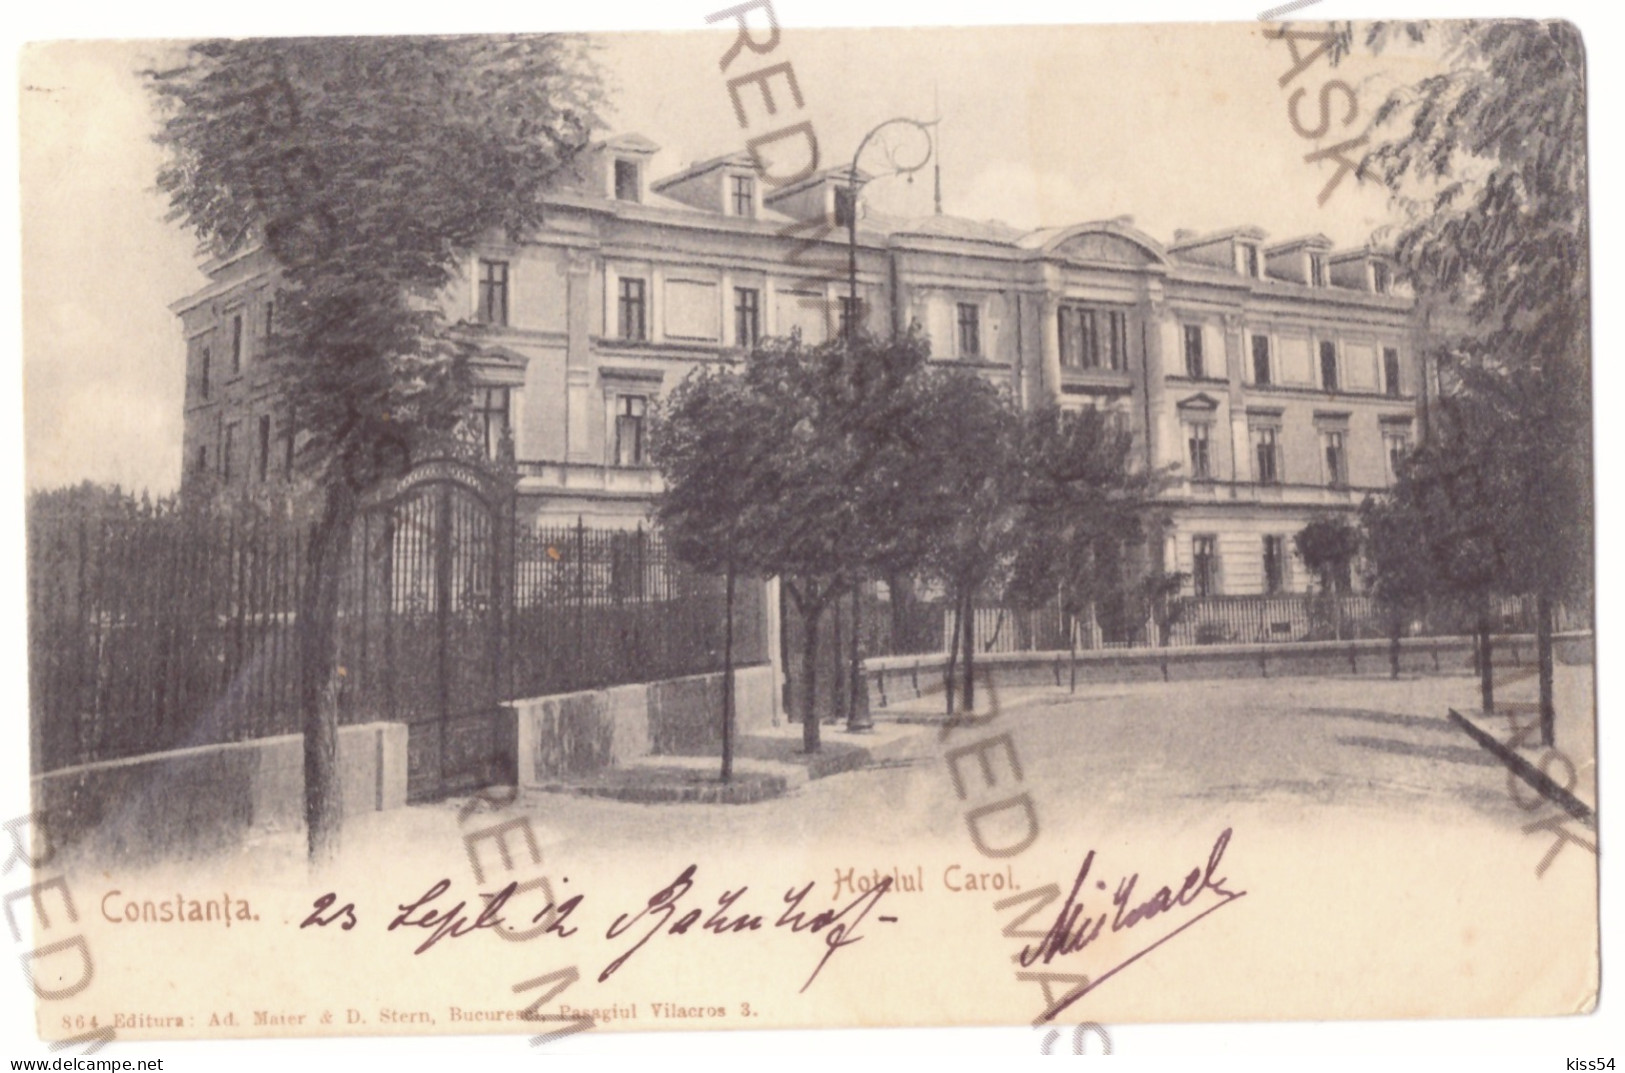 RO 81 - 18383 CONSTANTA, Hotel Carol, Romania - Old Postcard - Used - 1912 - Romania